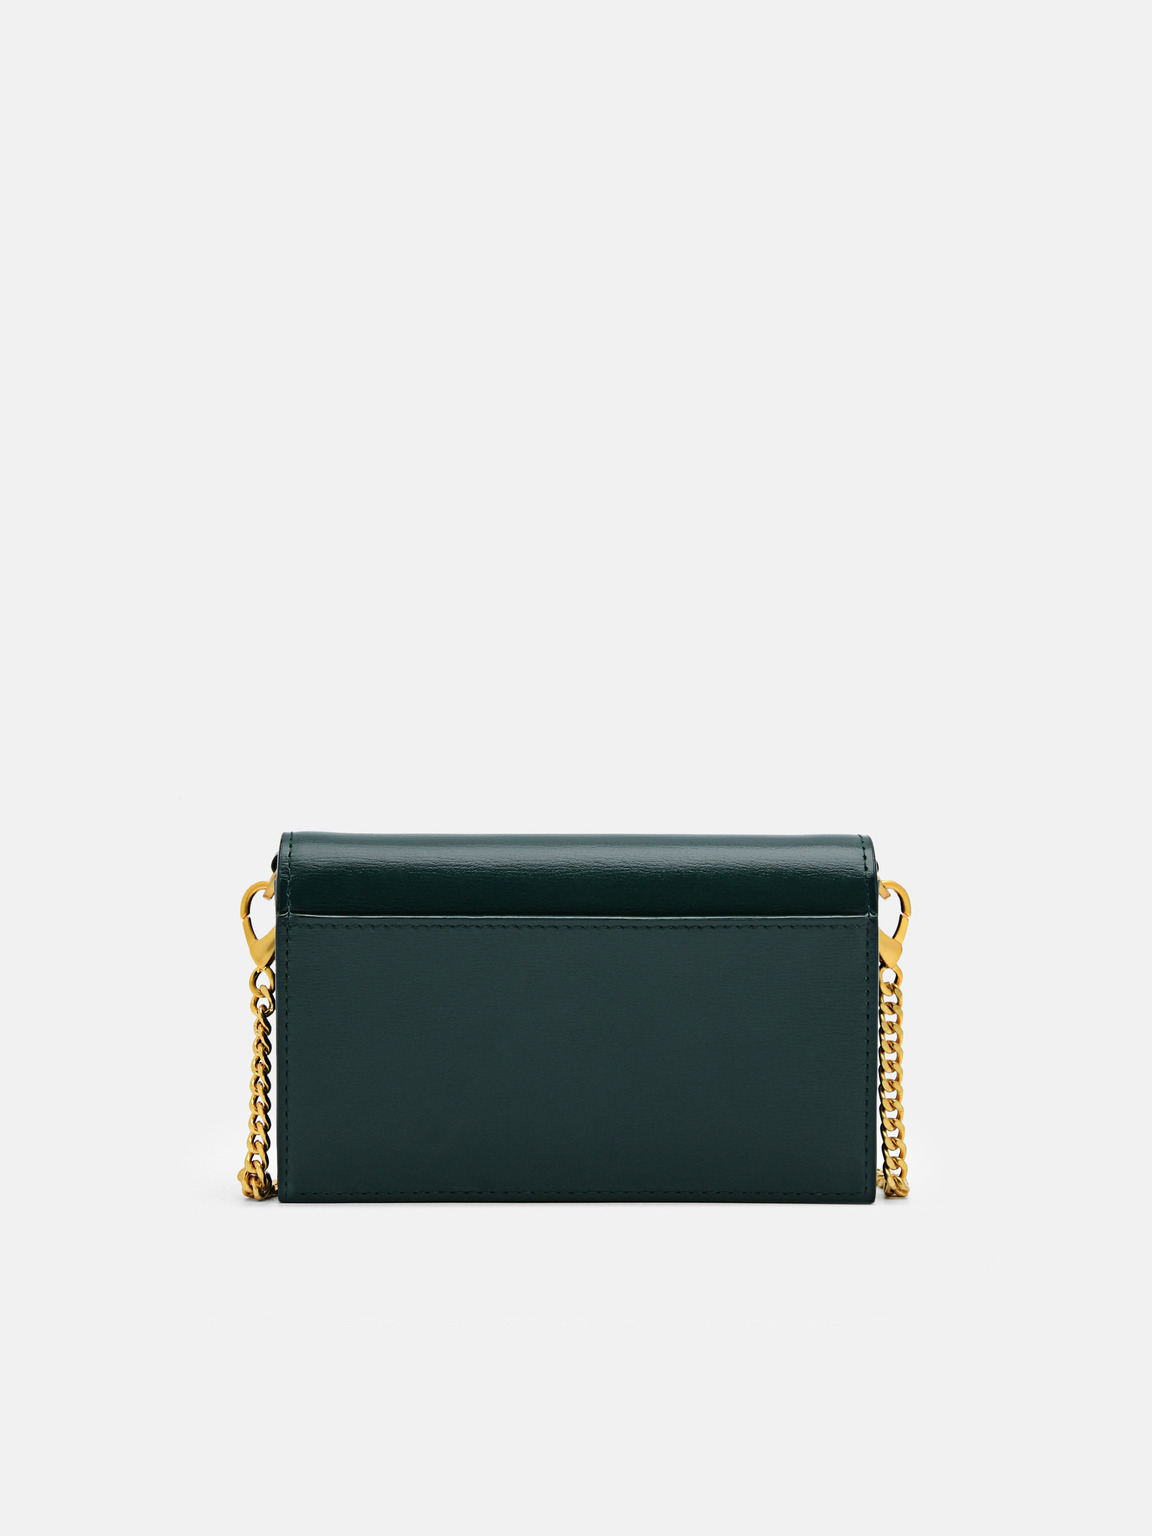 PEDRO Icon Leather Bi-Fold Wallet, Dark Green